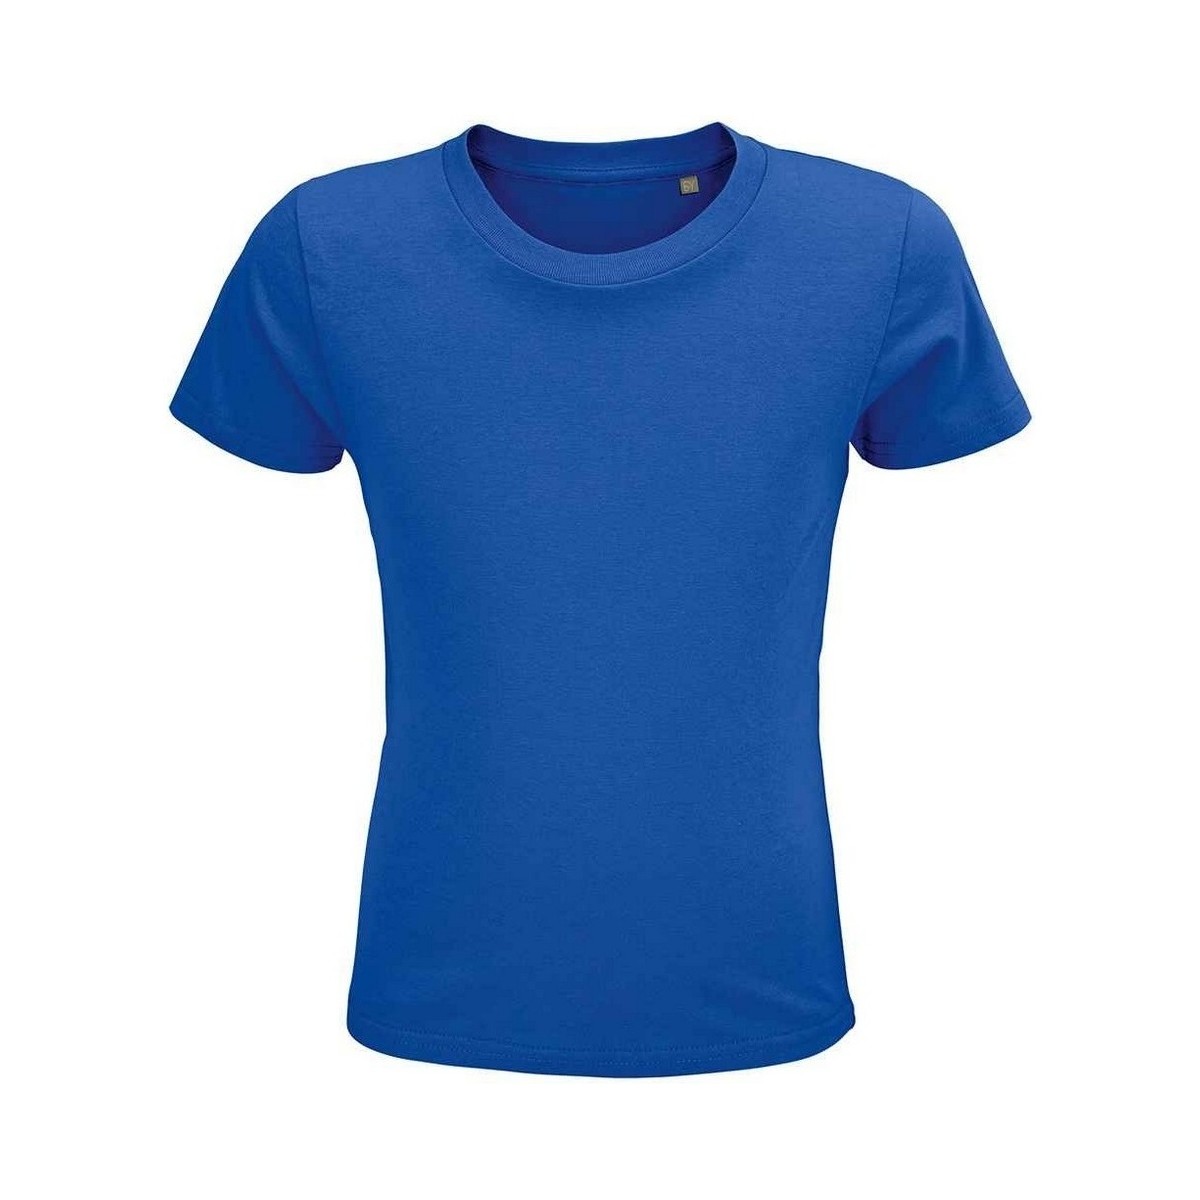 Vêtements Enfant T-shirts manches courtes Sols Crusader Bleu